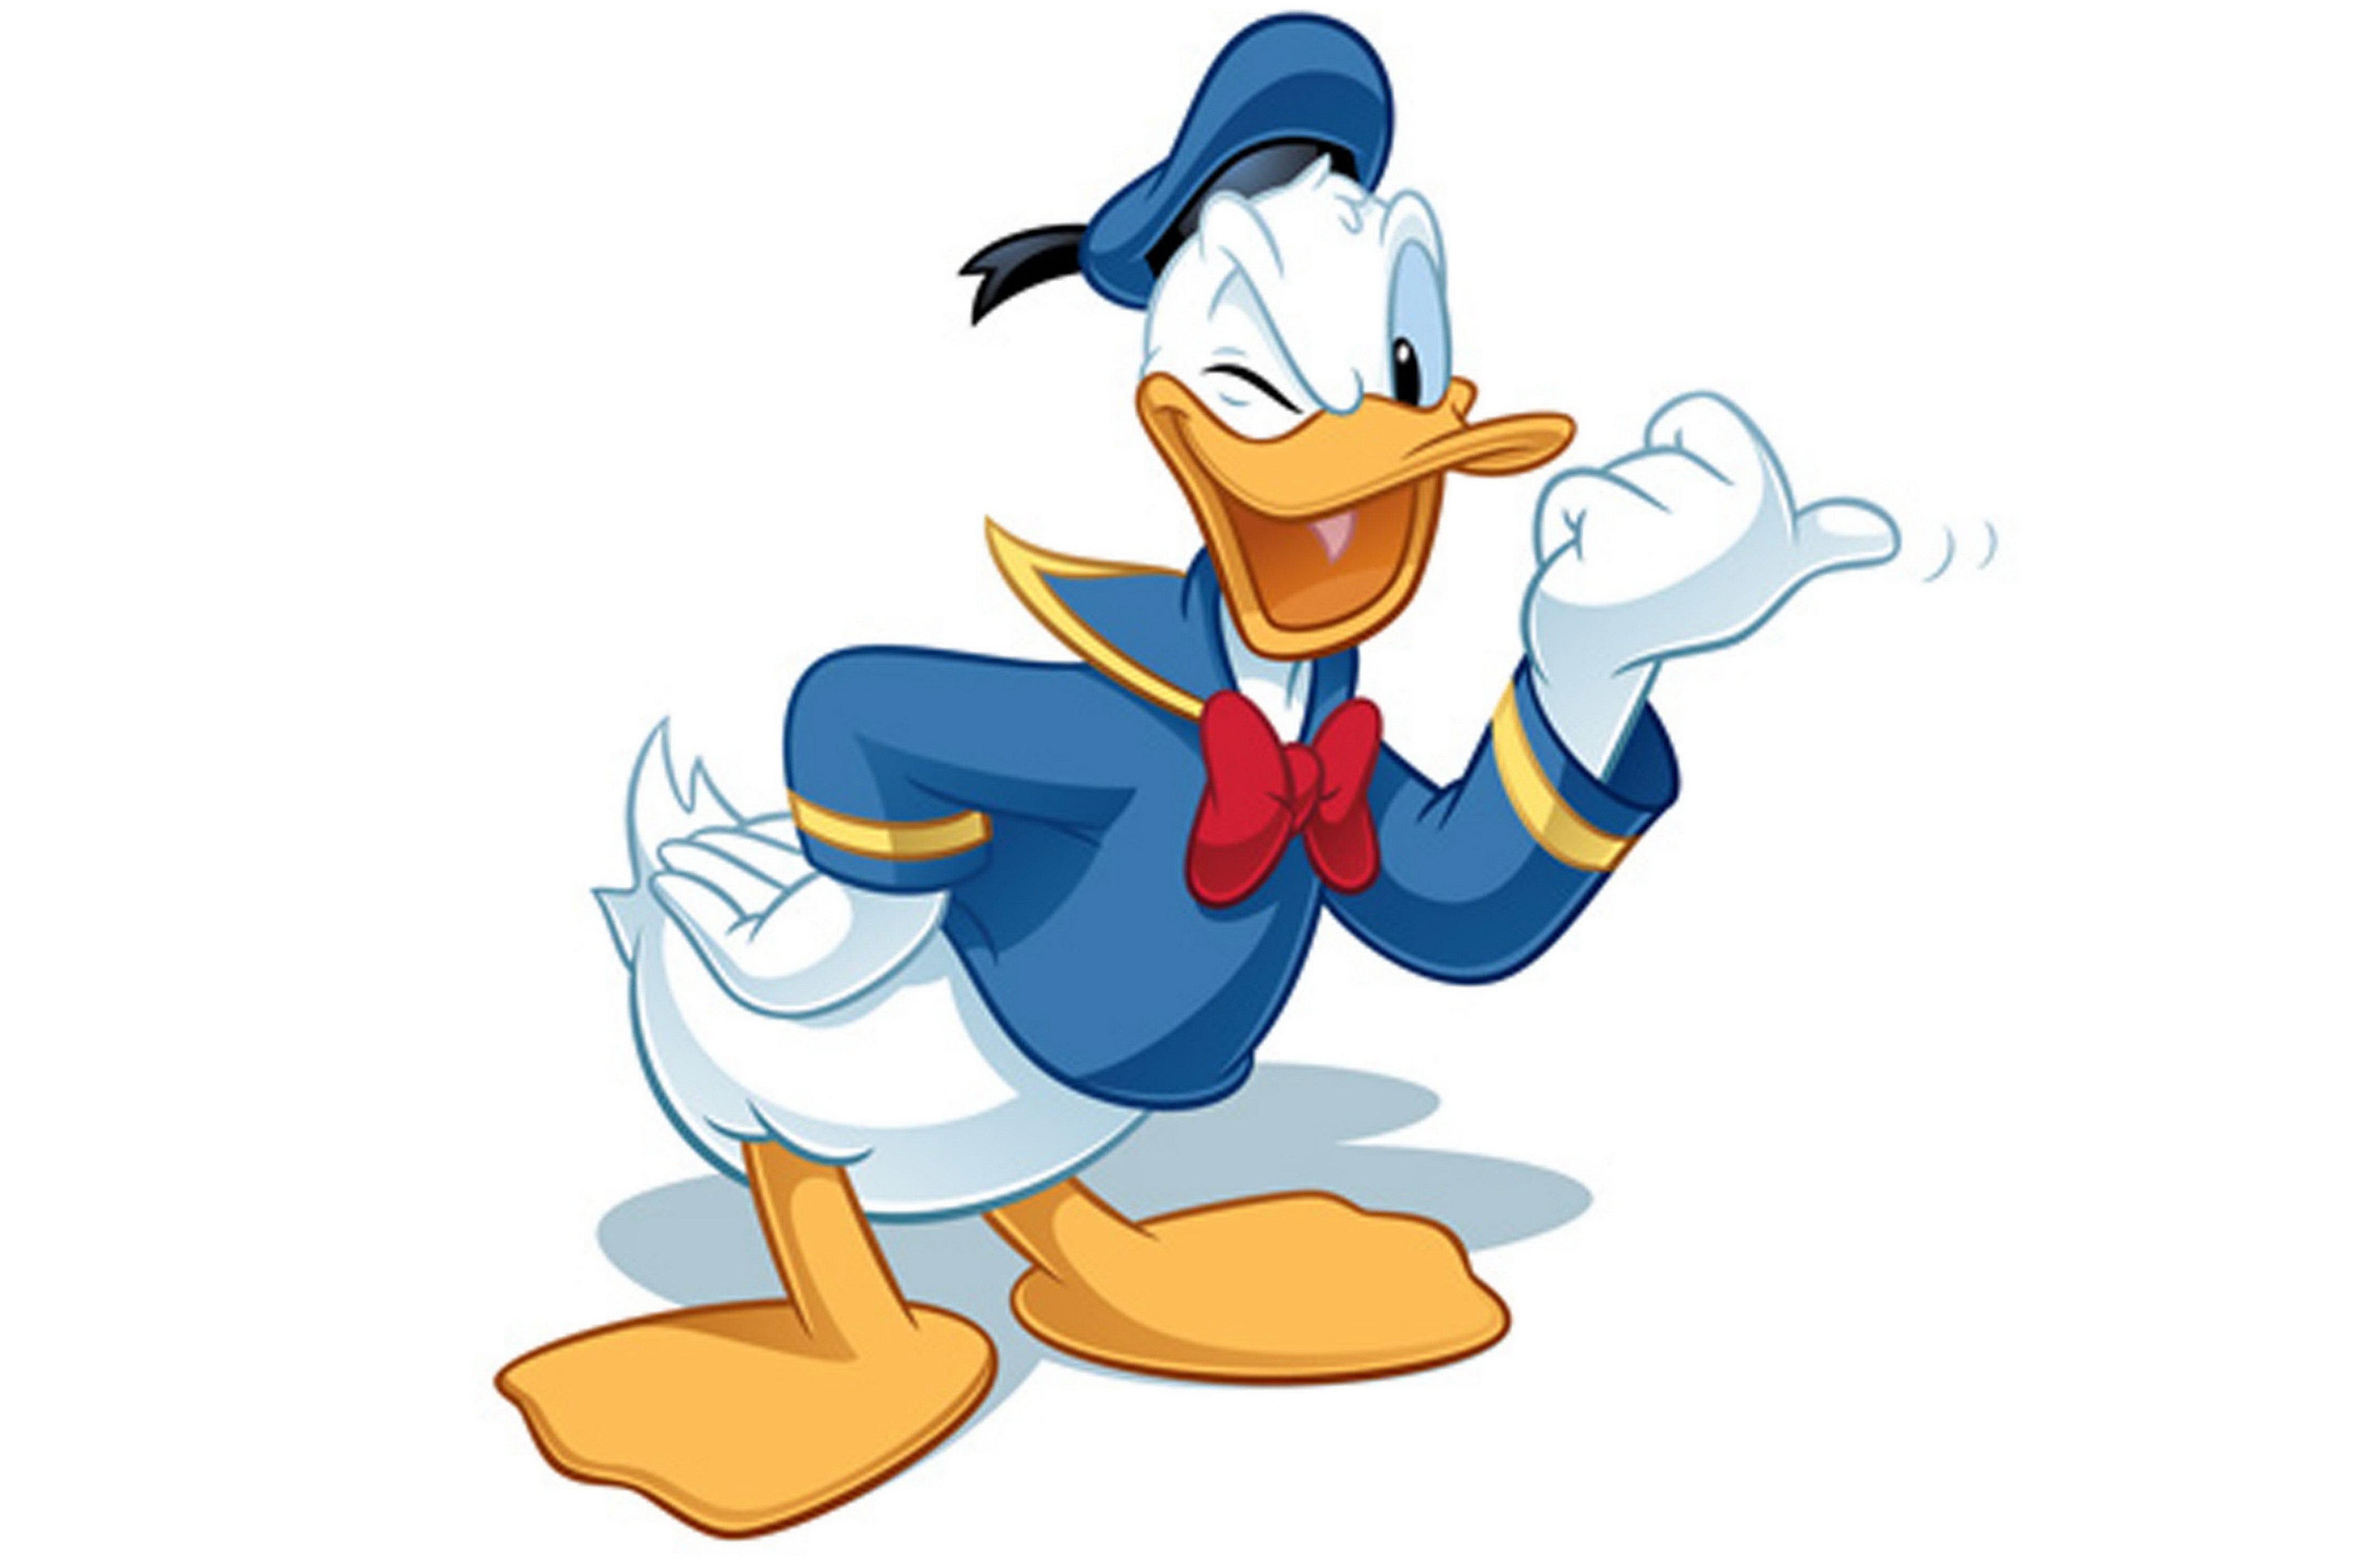 Donald Duck we peeking - Cartoon character